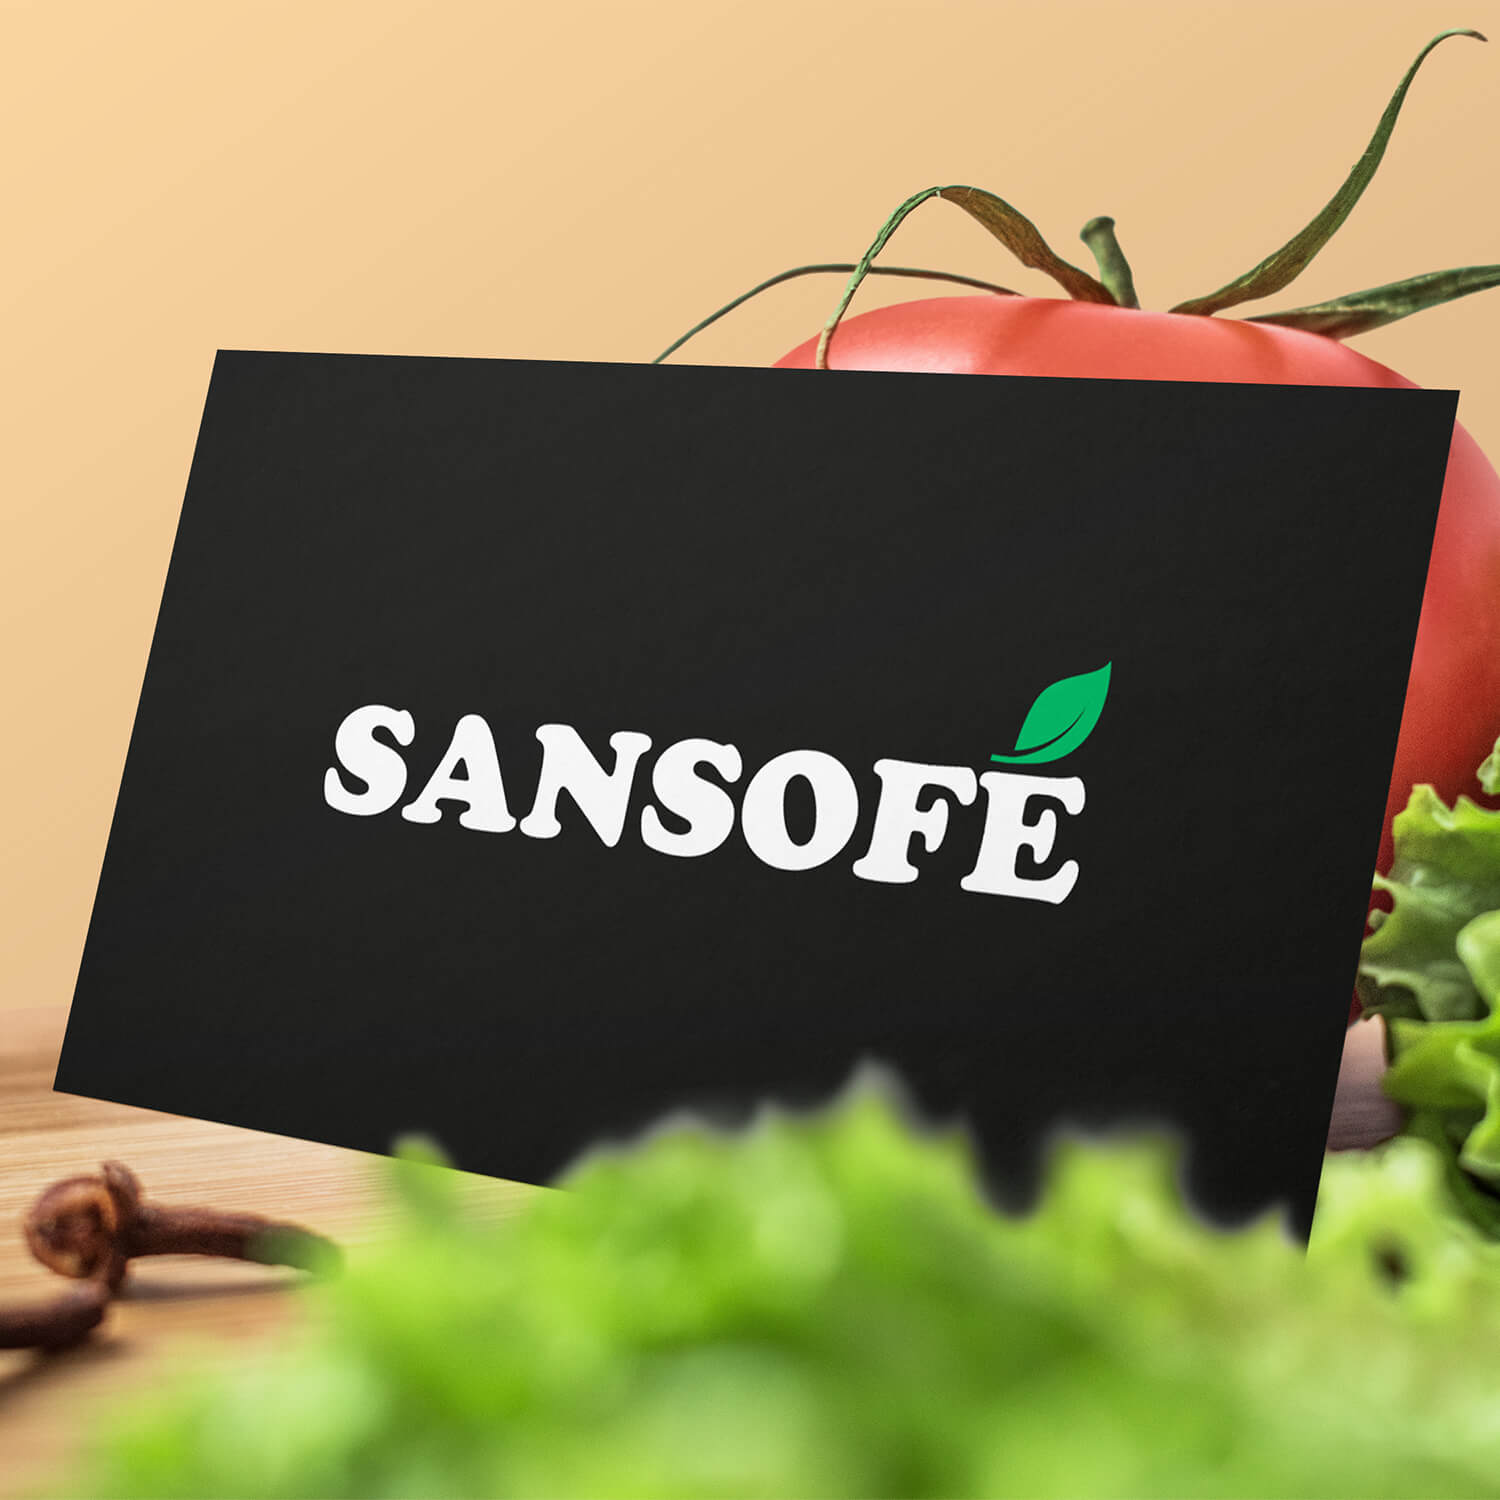 Nueva imagen de marca de Tasca Sansofé